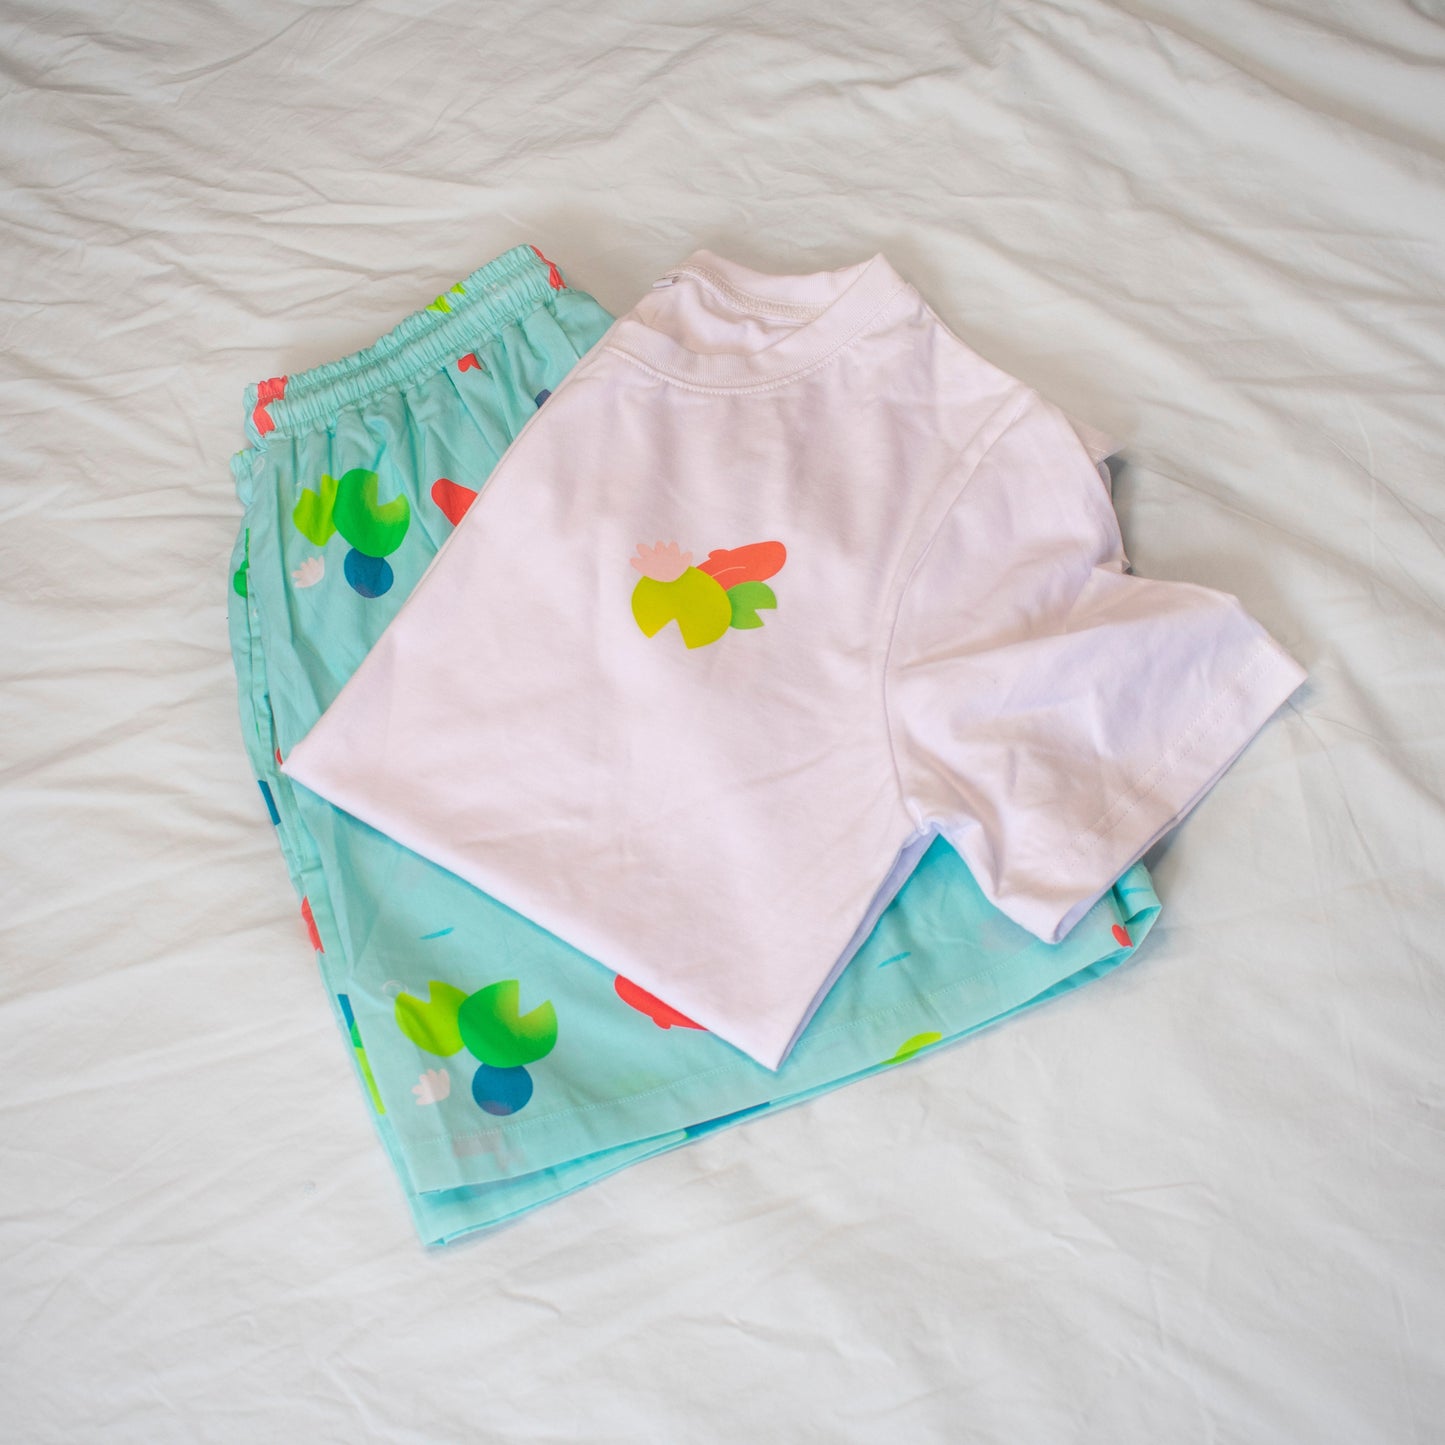 Fishpond Pyjamas bottoms